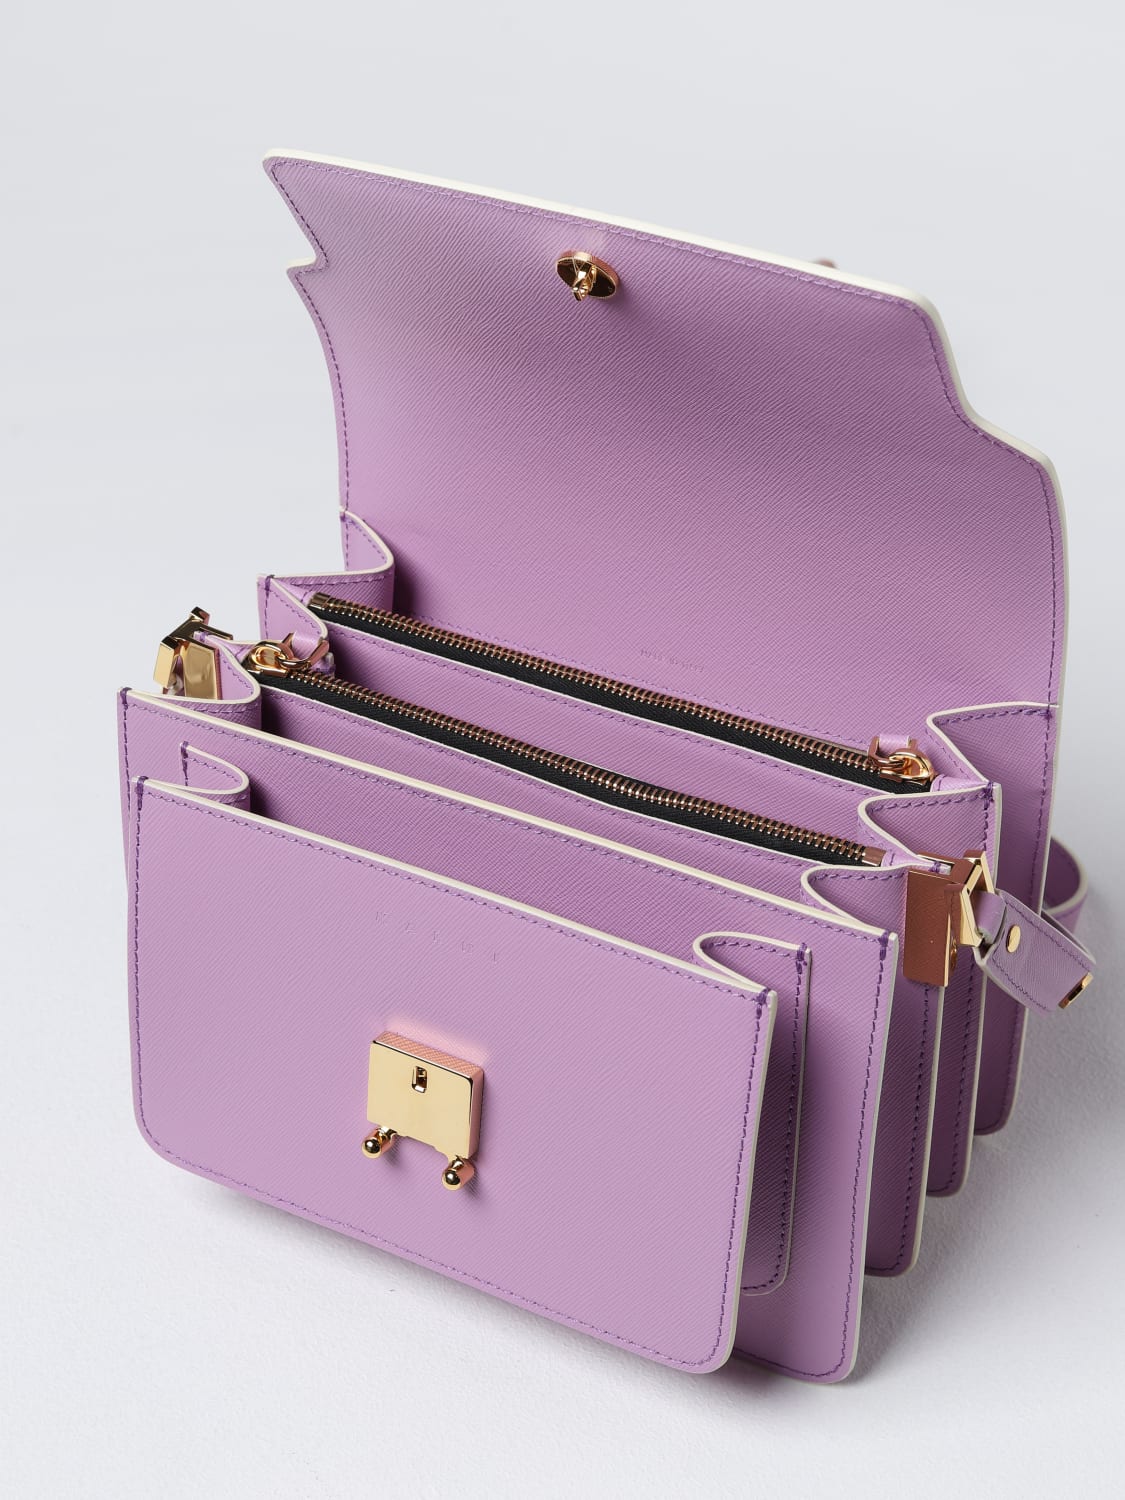 Marni 'trunk' Shoulder Bag in Purple